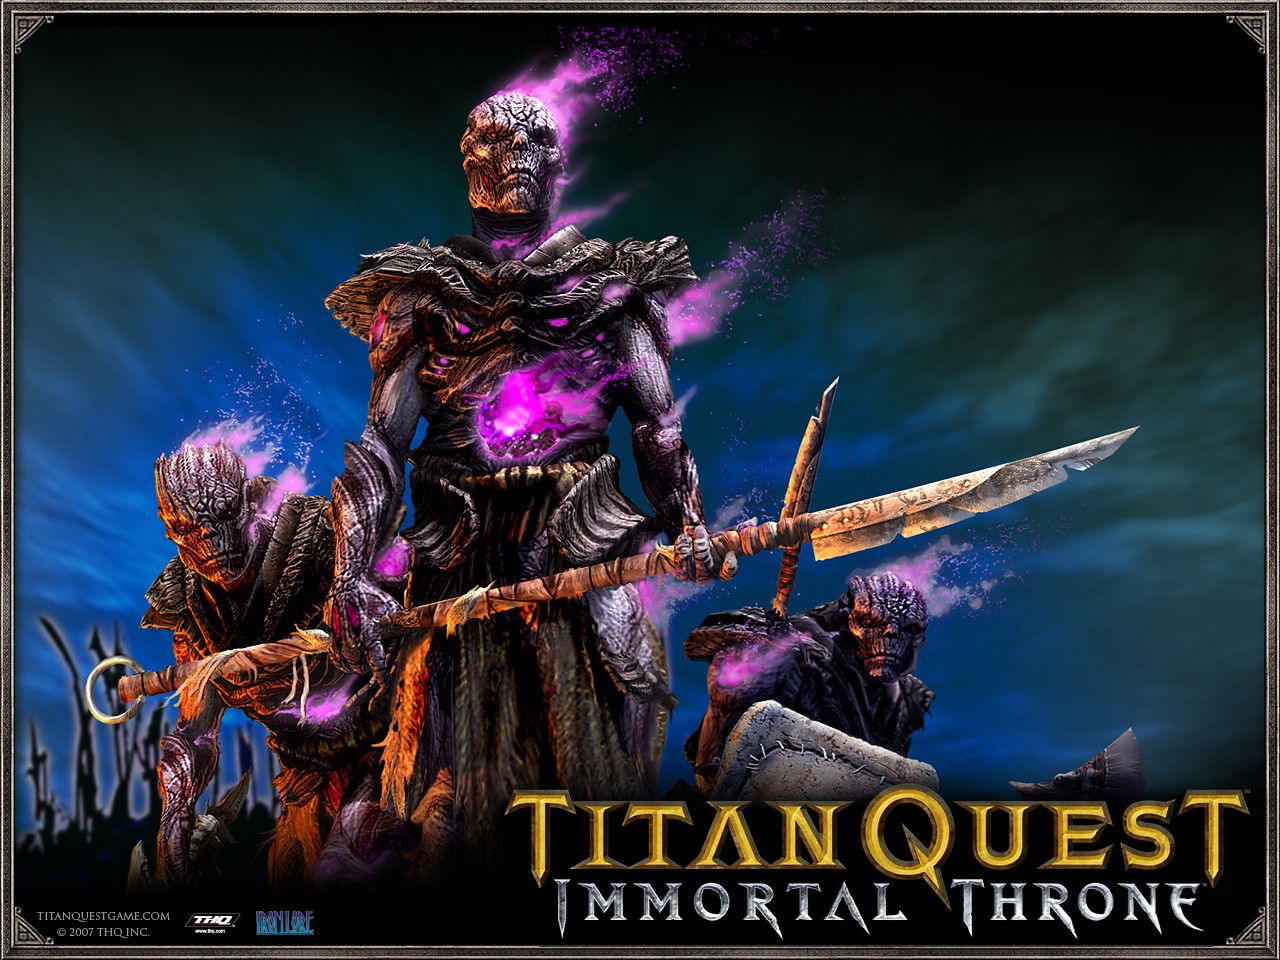 General 1280x960 video games Titan Quest PC gaming video game art fantasy art 2007 (Year)